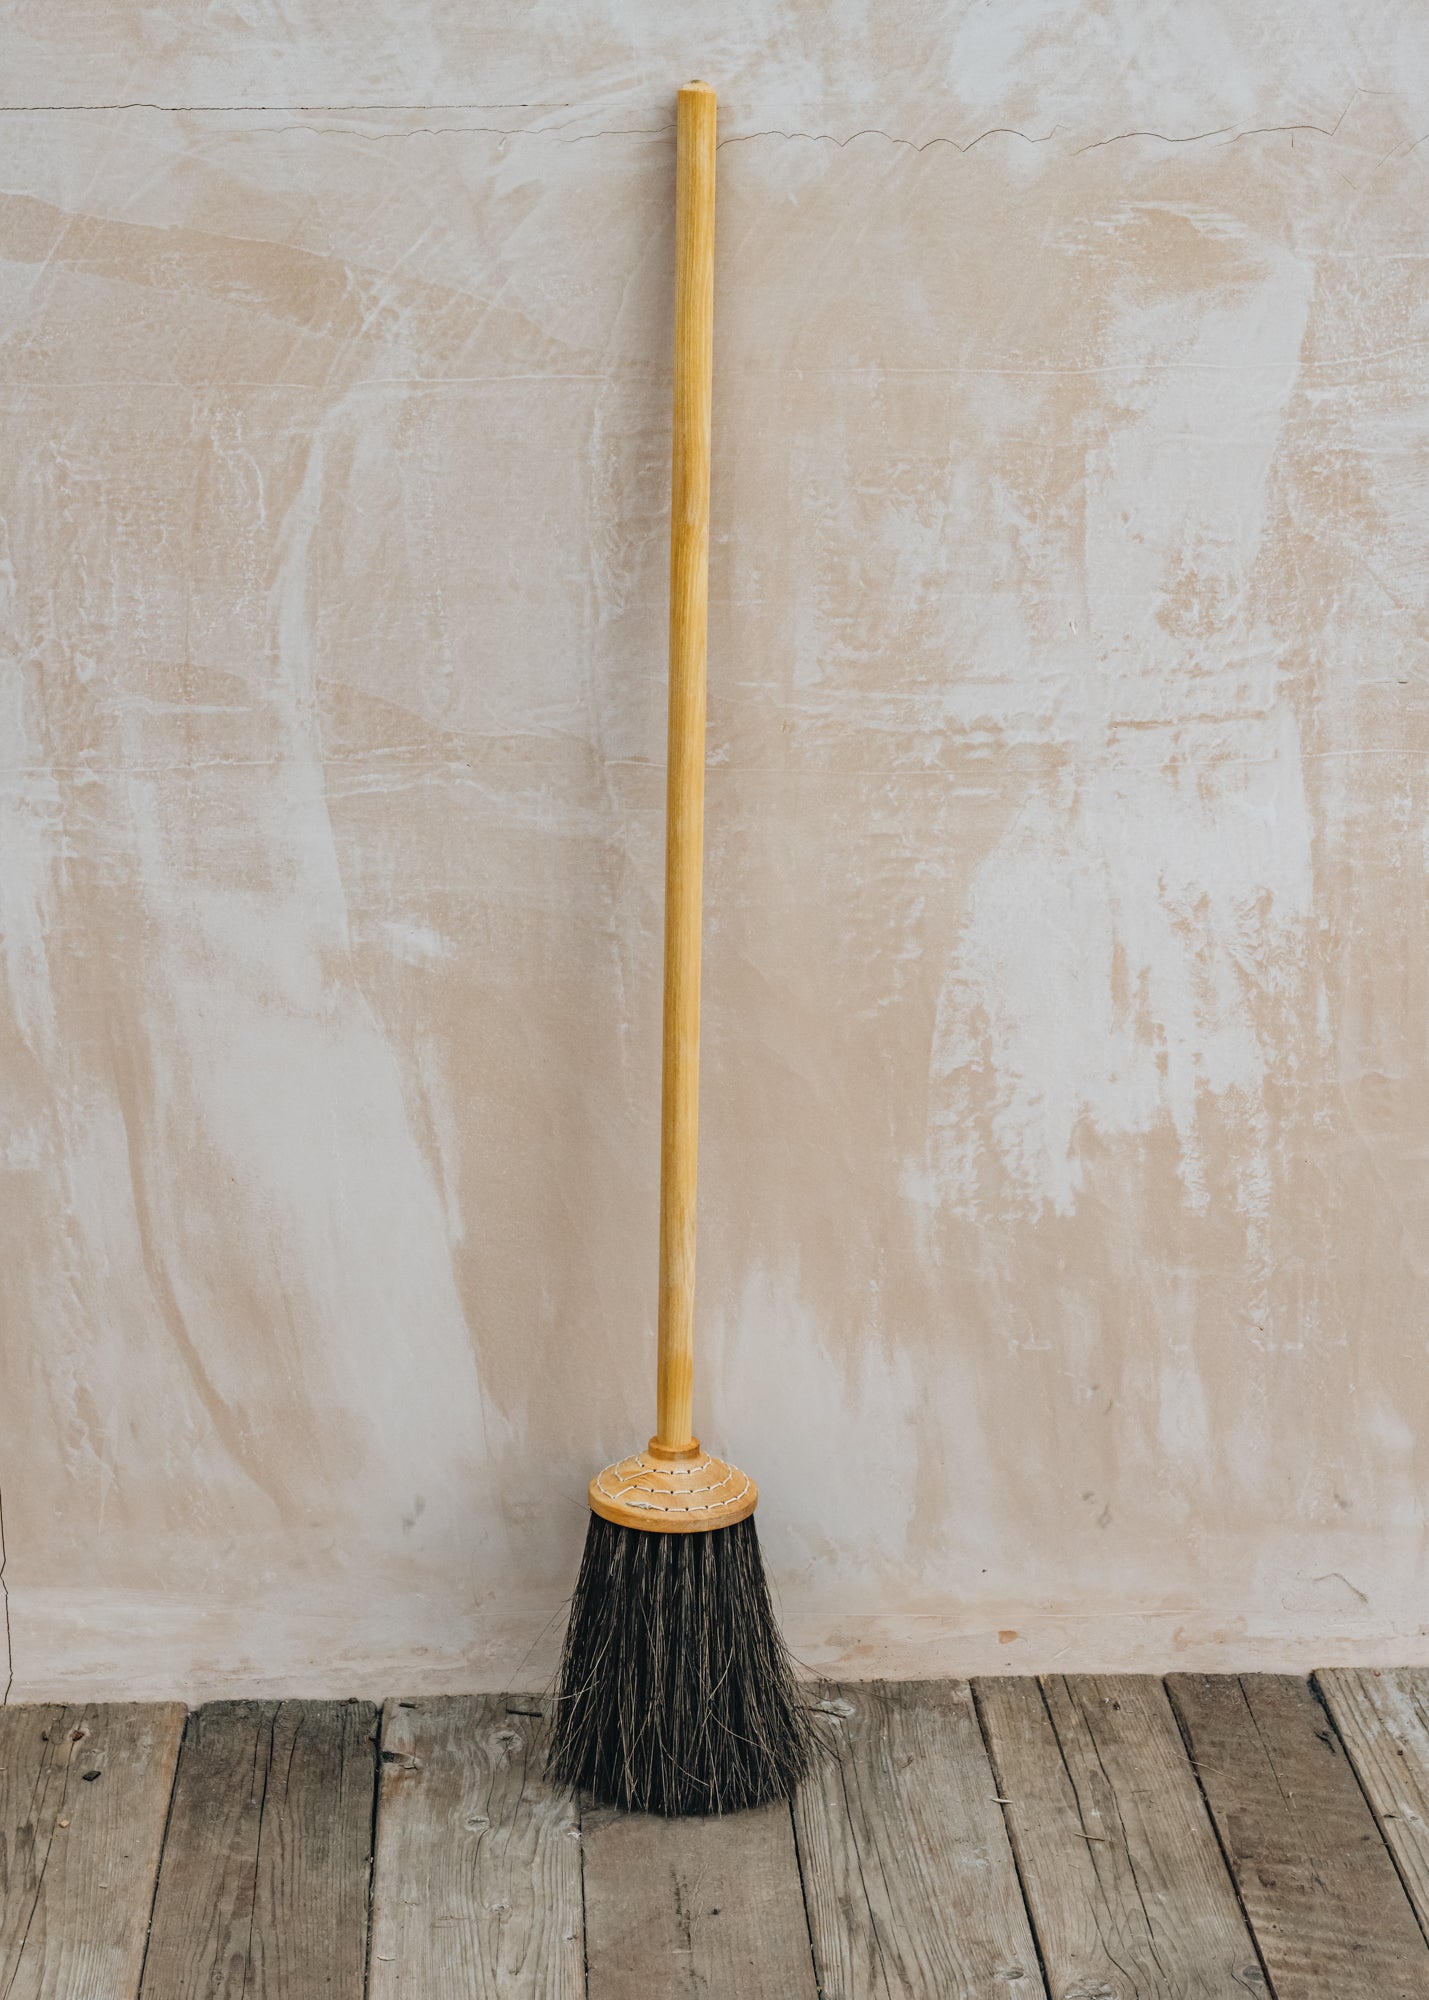 Iris Hantverk Porch Broom with Long Handle